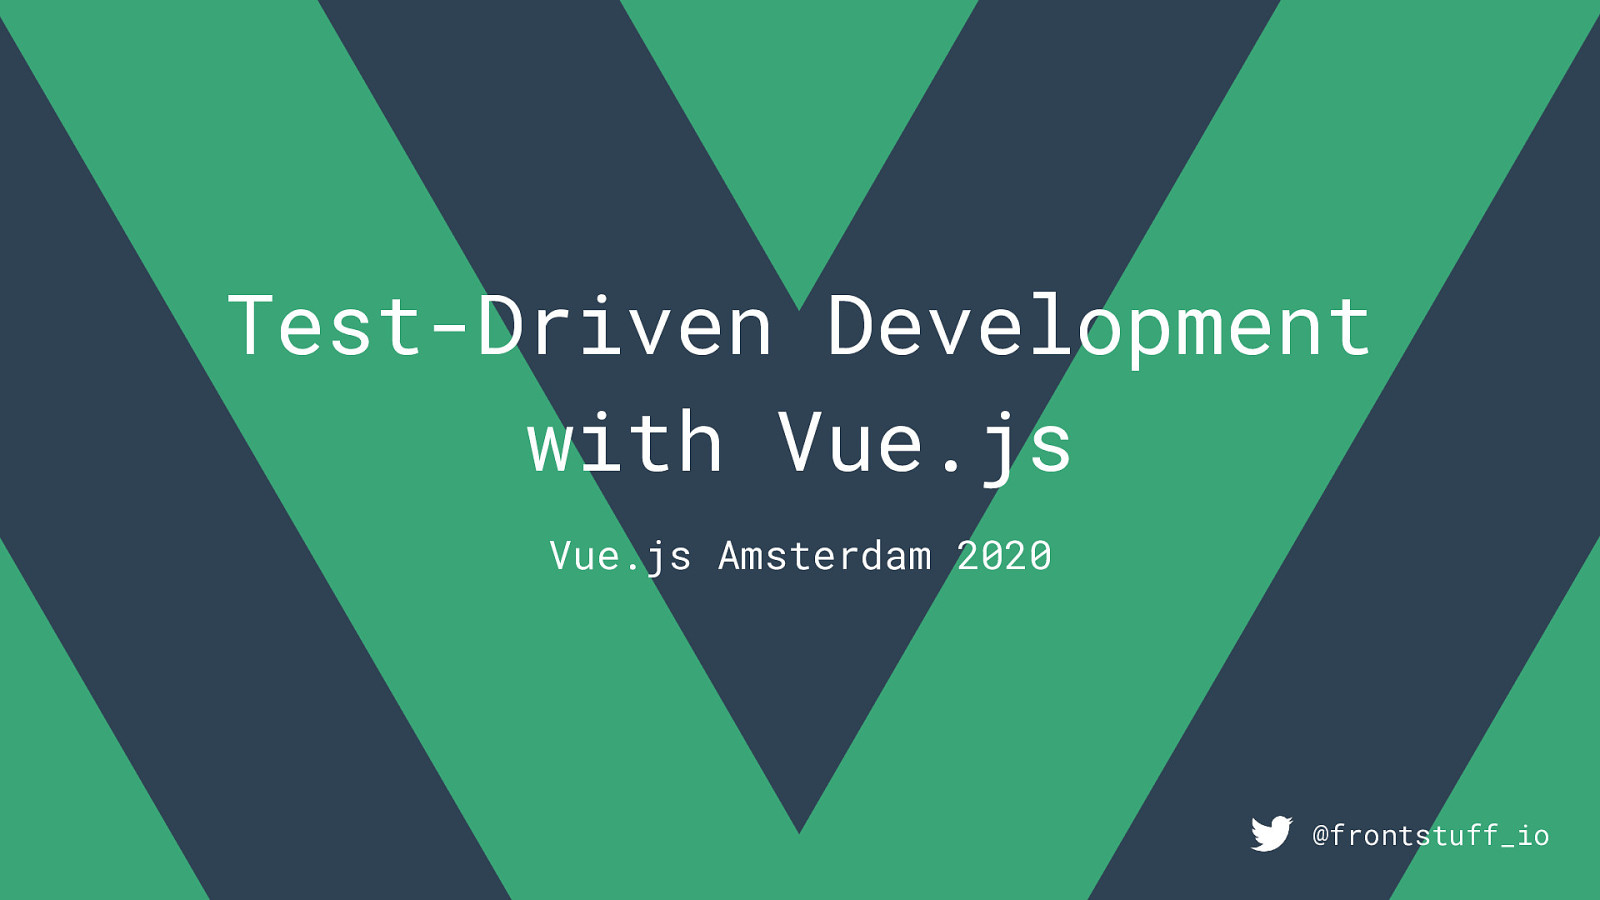 Test-Driven Development with Vue.js